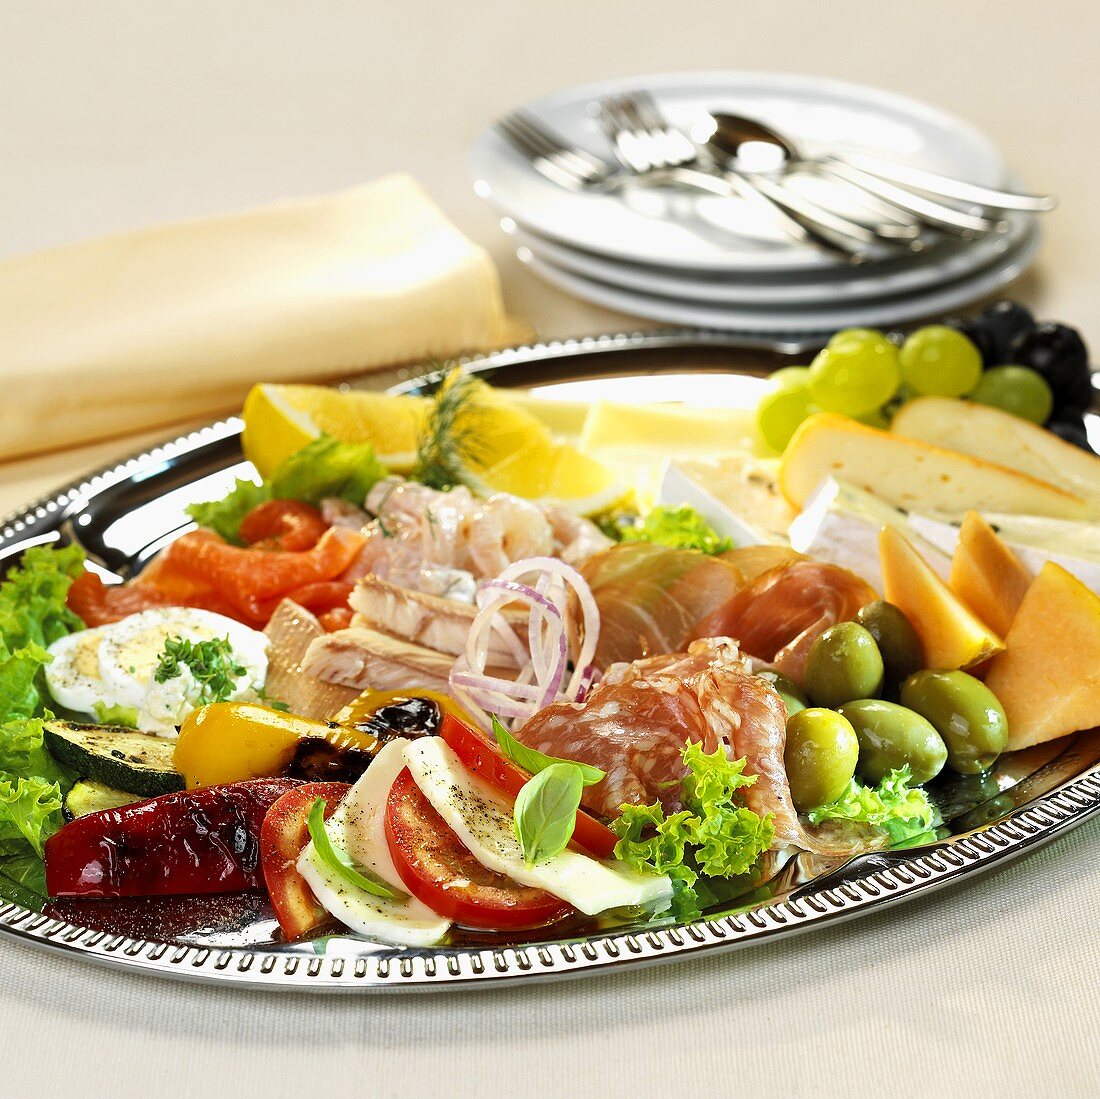 Antipasti misti (Vorspeisenplatte mit Wurst, Käse & Gemüse)